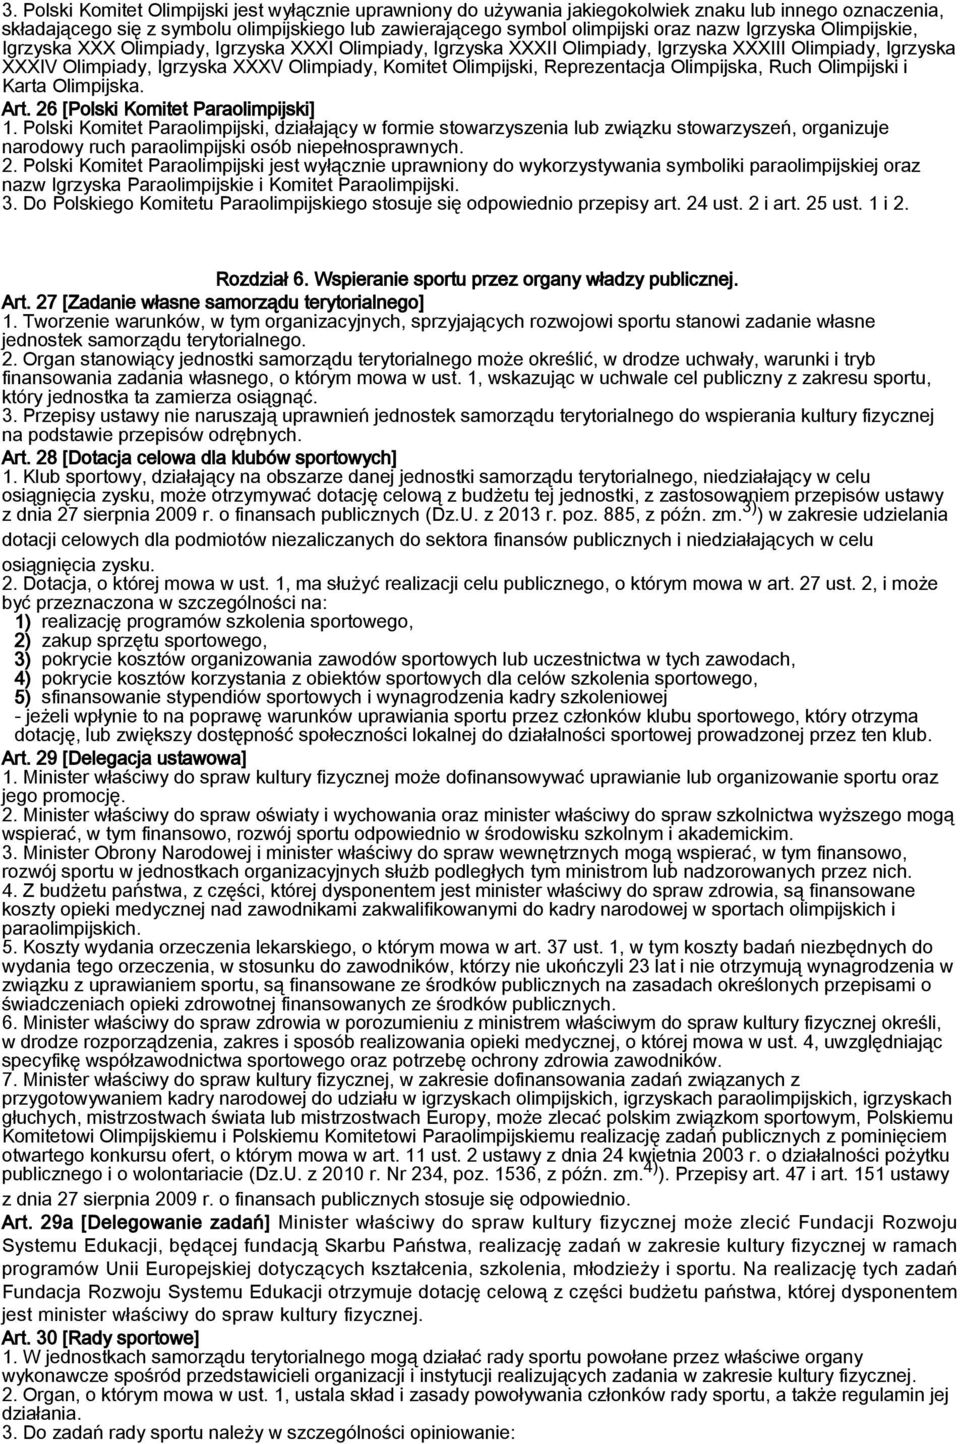 Reprezentacja Olimpijska, Ruch Olimpijski i Karta Olimpijska. Art. 26 [Polski Komitet Paraolimpijski] 1.